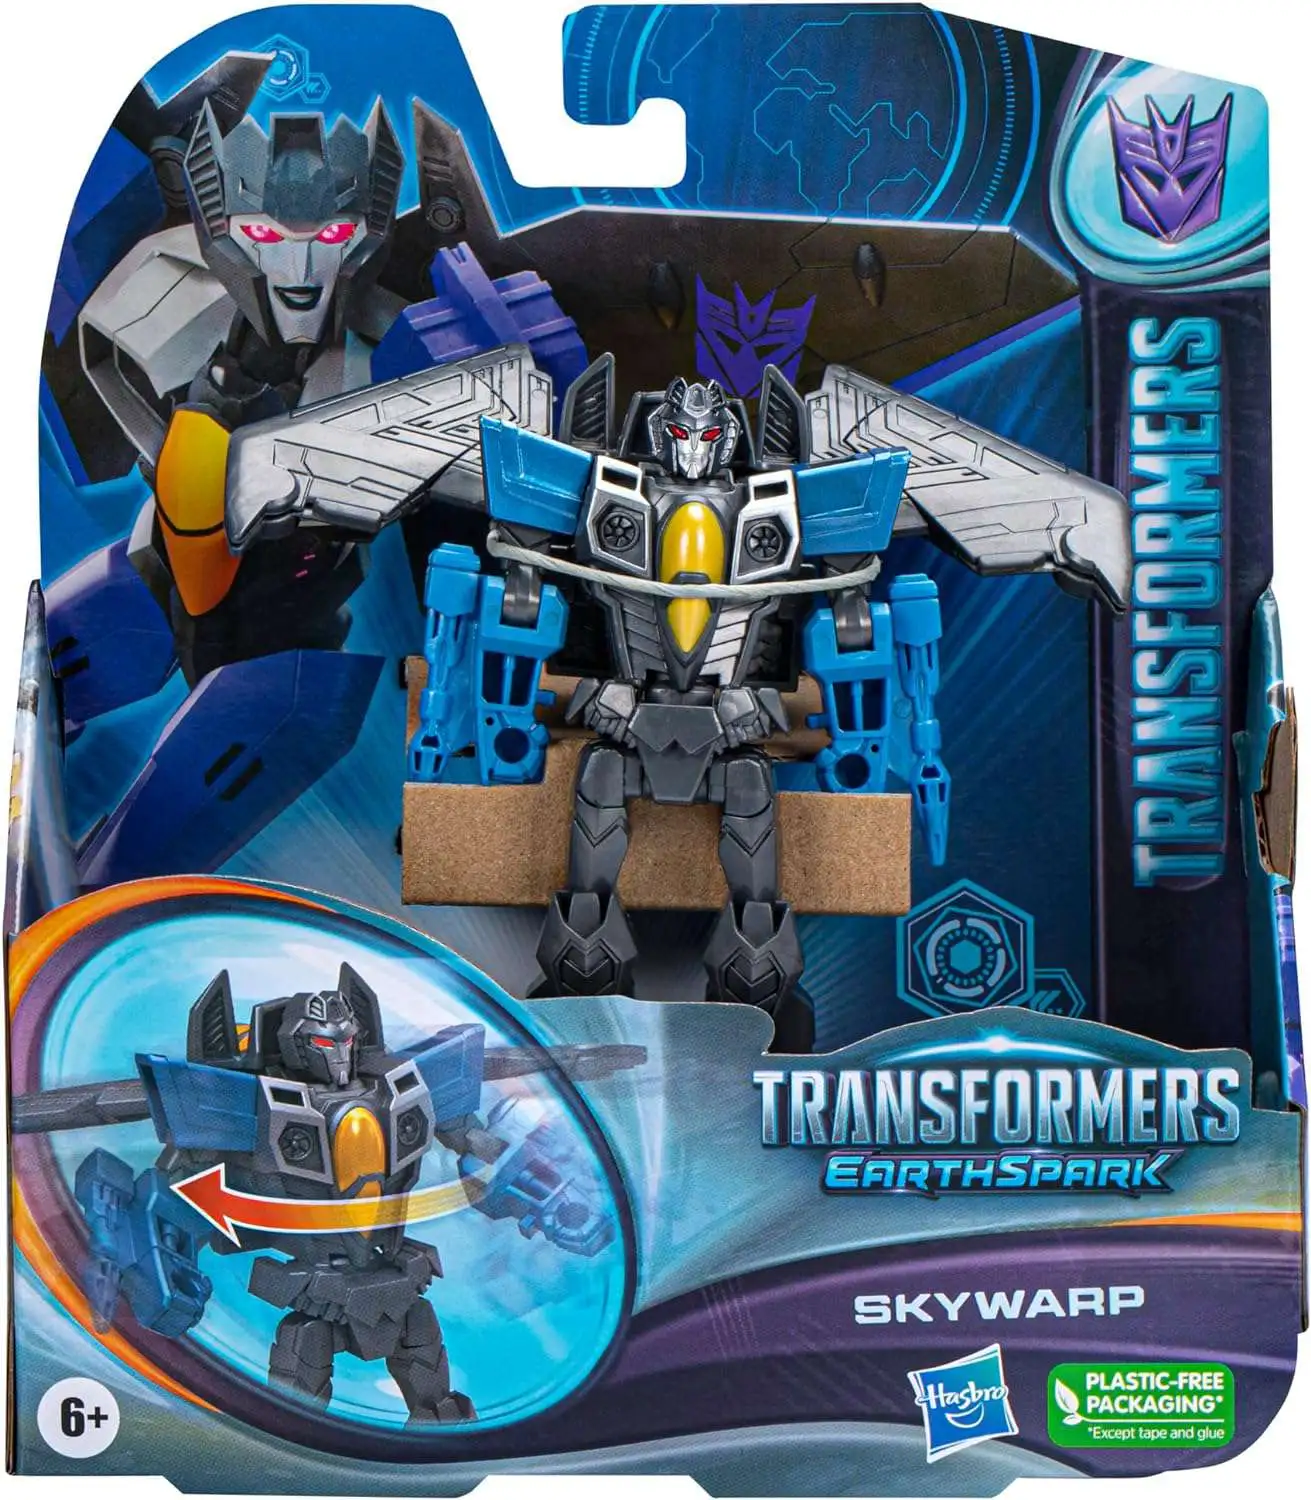 Transformers Earthspark Skywarp Warrior Action Figure Hasbro - ToyWiz